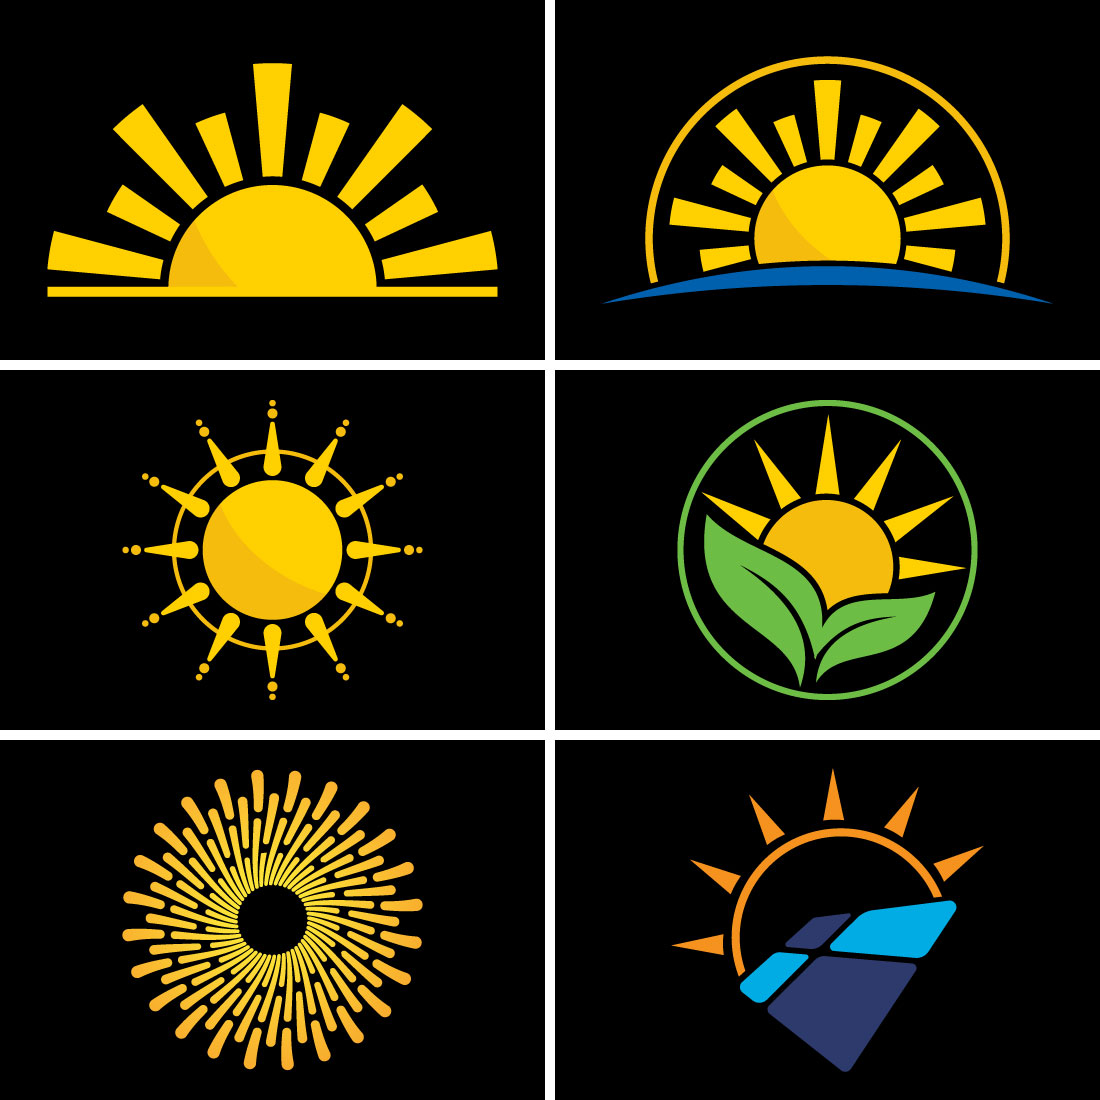 Abstract creative sun logo design, Summer Sun Logo, Sunburst icon sign symbol cover image.